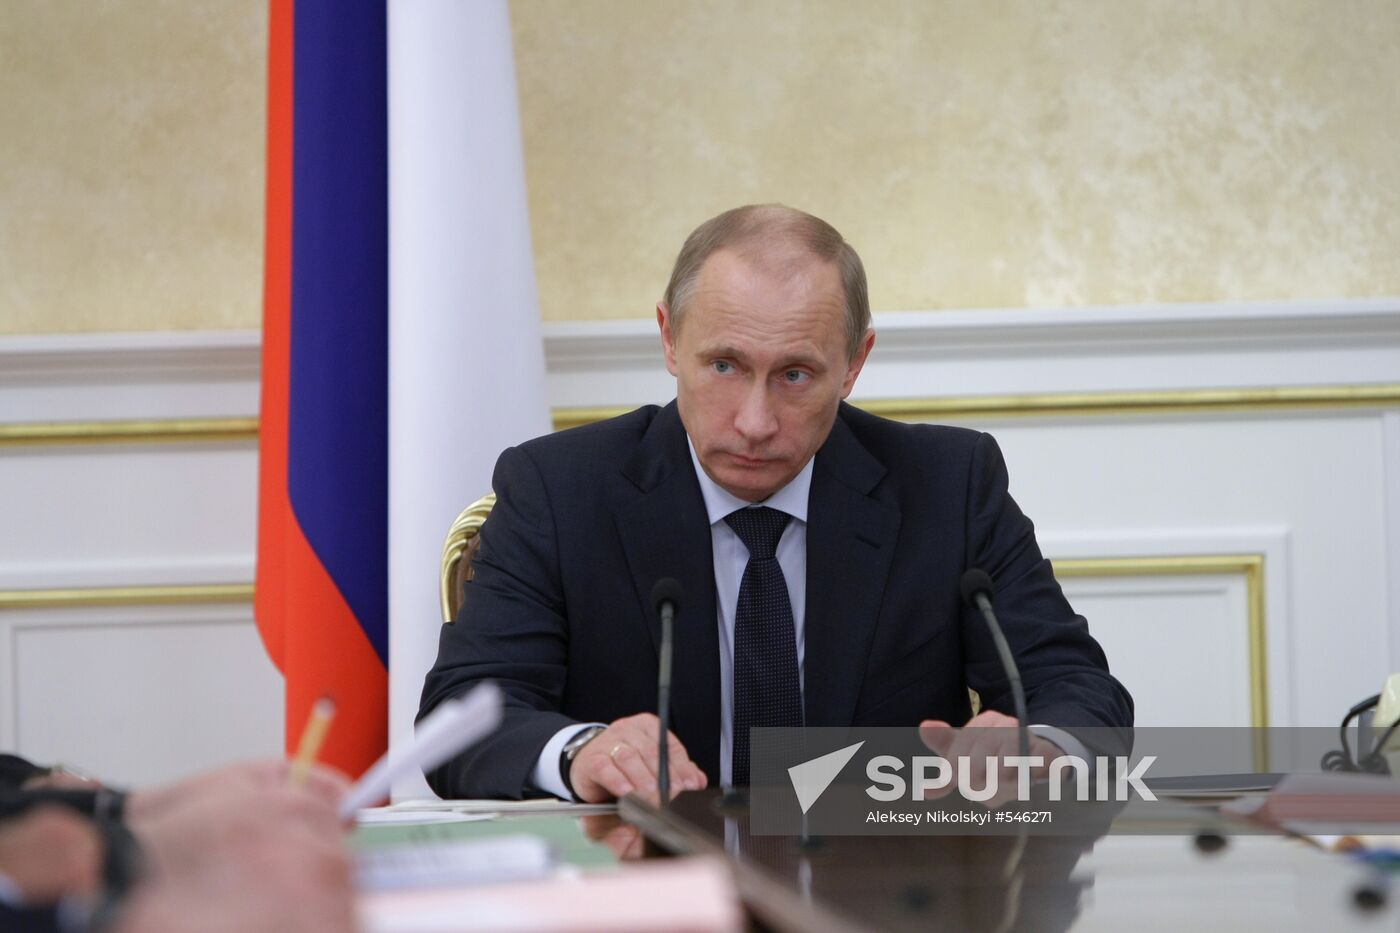 Vladimir Putin chairs Government Presidium session